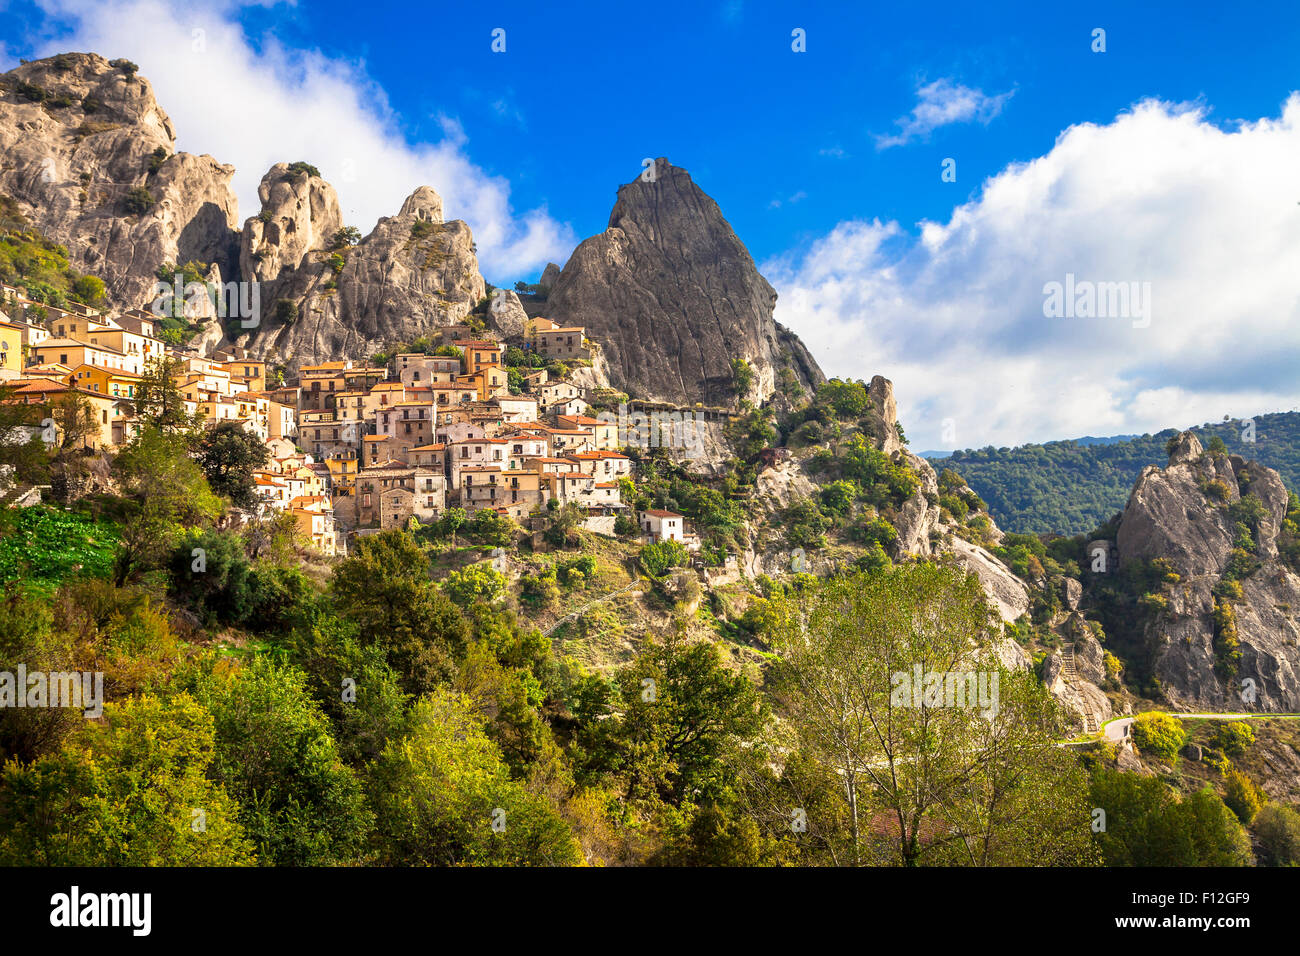 impressive village in rocky mountains Castelmezzano. Basilicata region, Italy Stock Photo